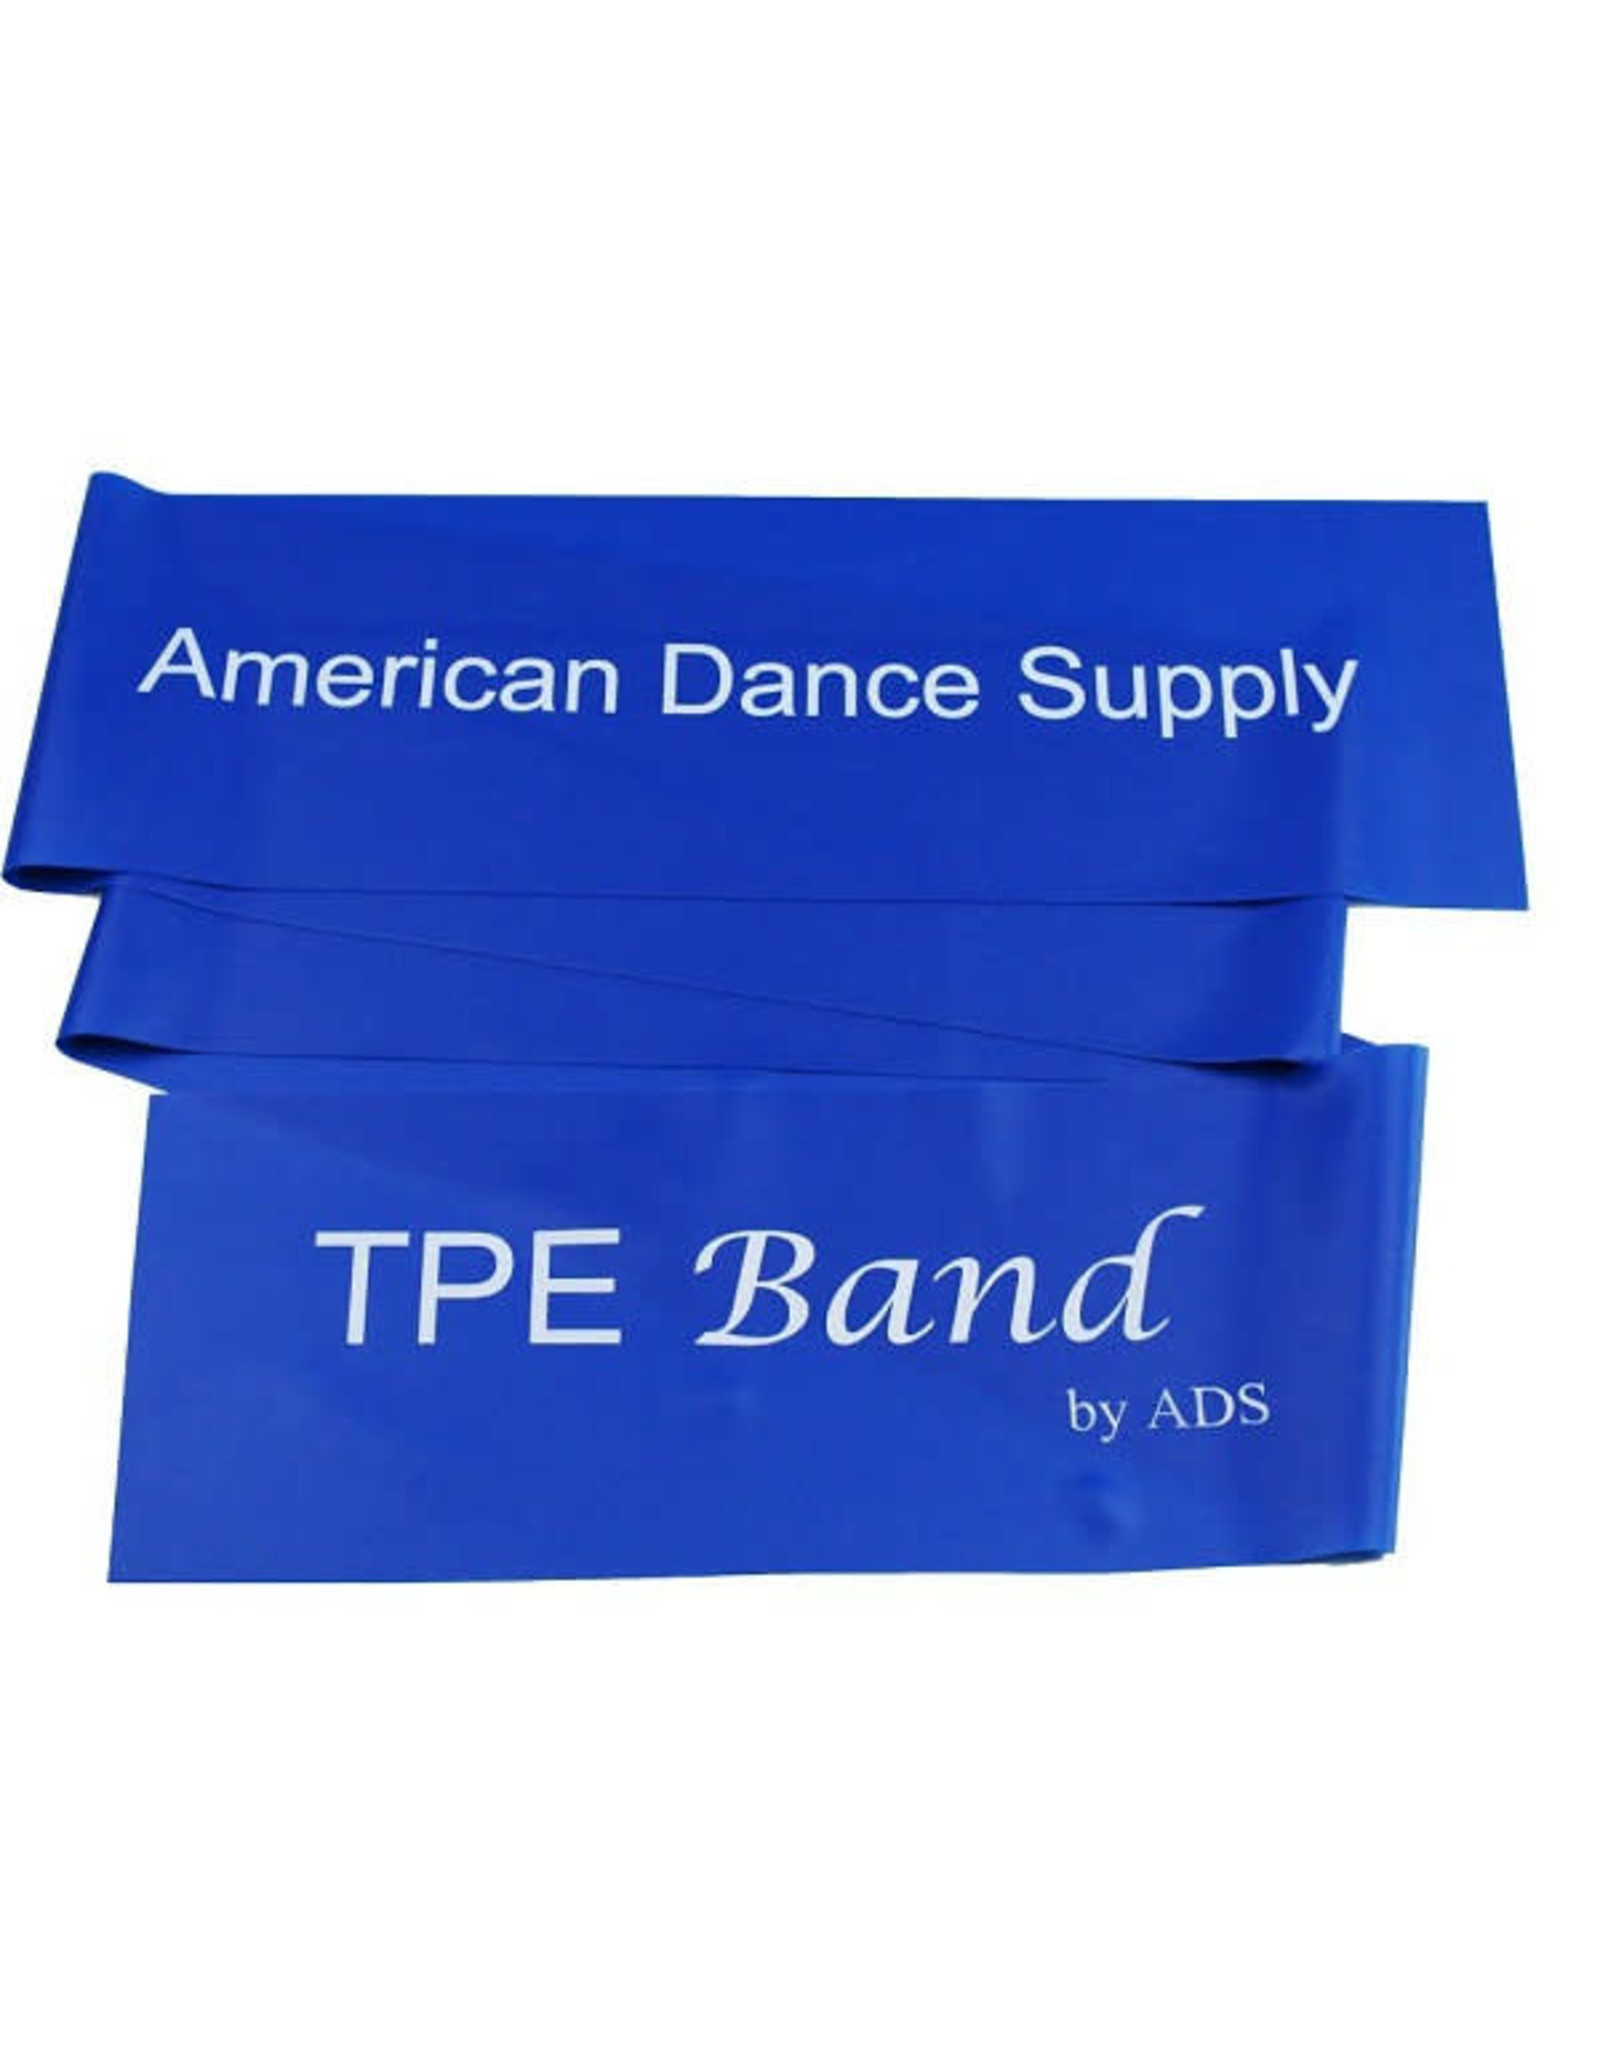 American Dance Supply TPE Band Heavy